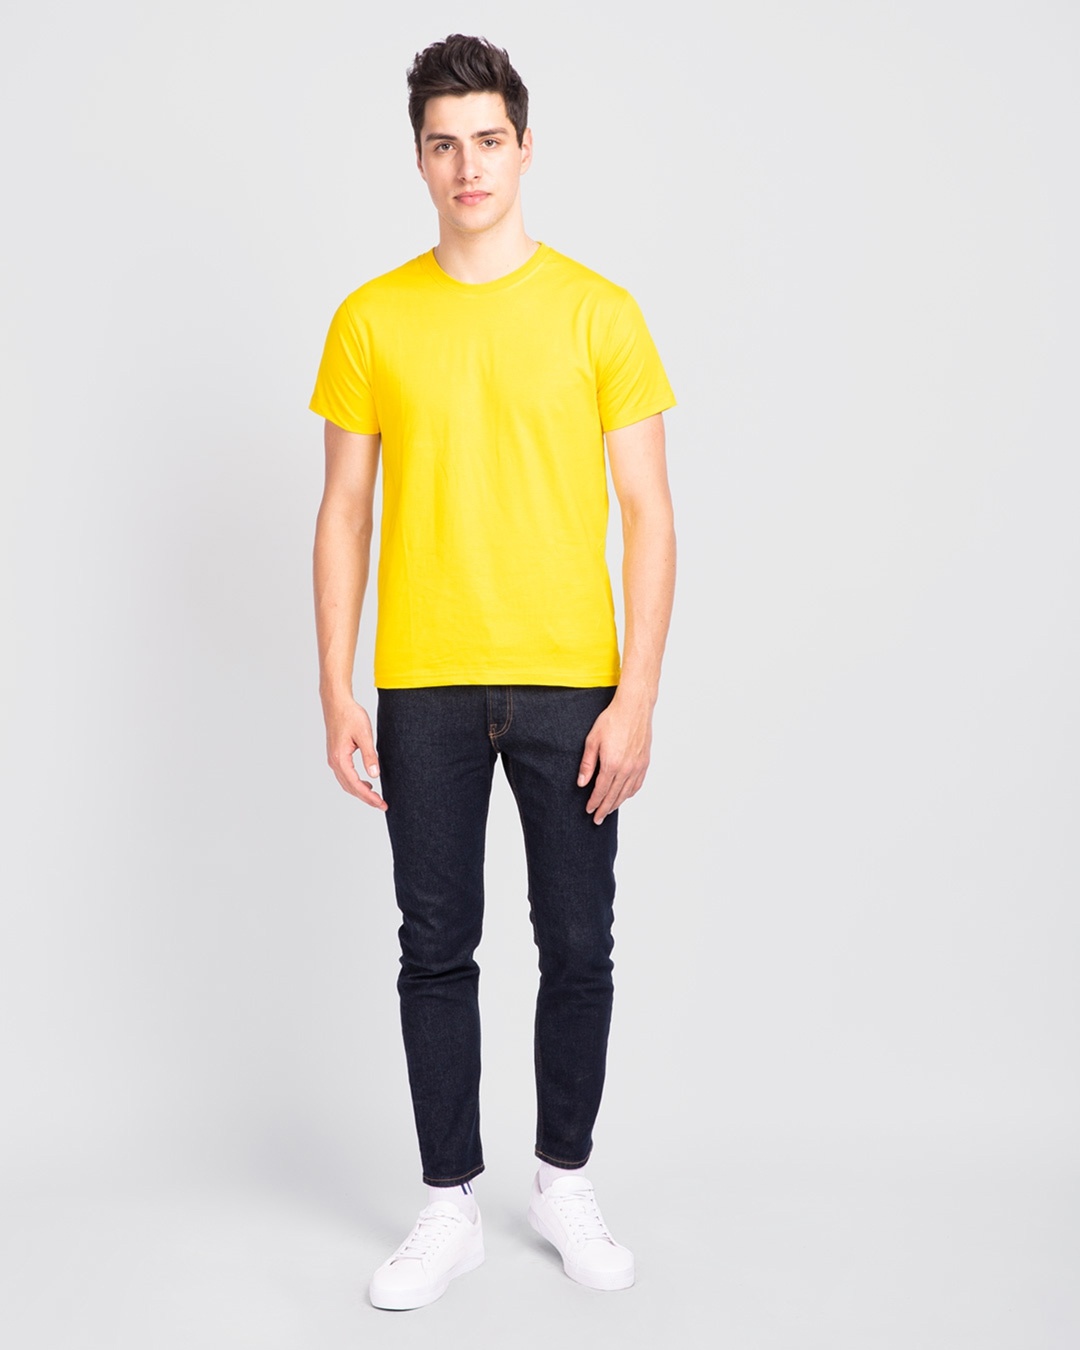 Shop Men's Plain Half Sleeve T-Shirt Pack of 2(Red & Pineapple Yellow)